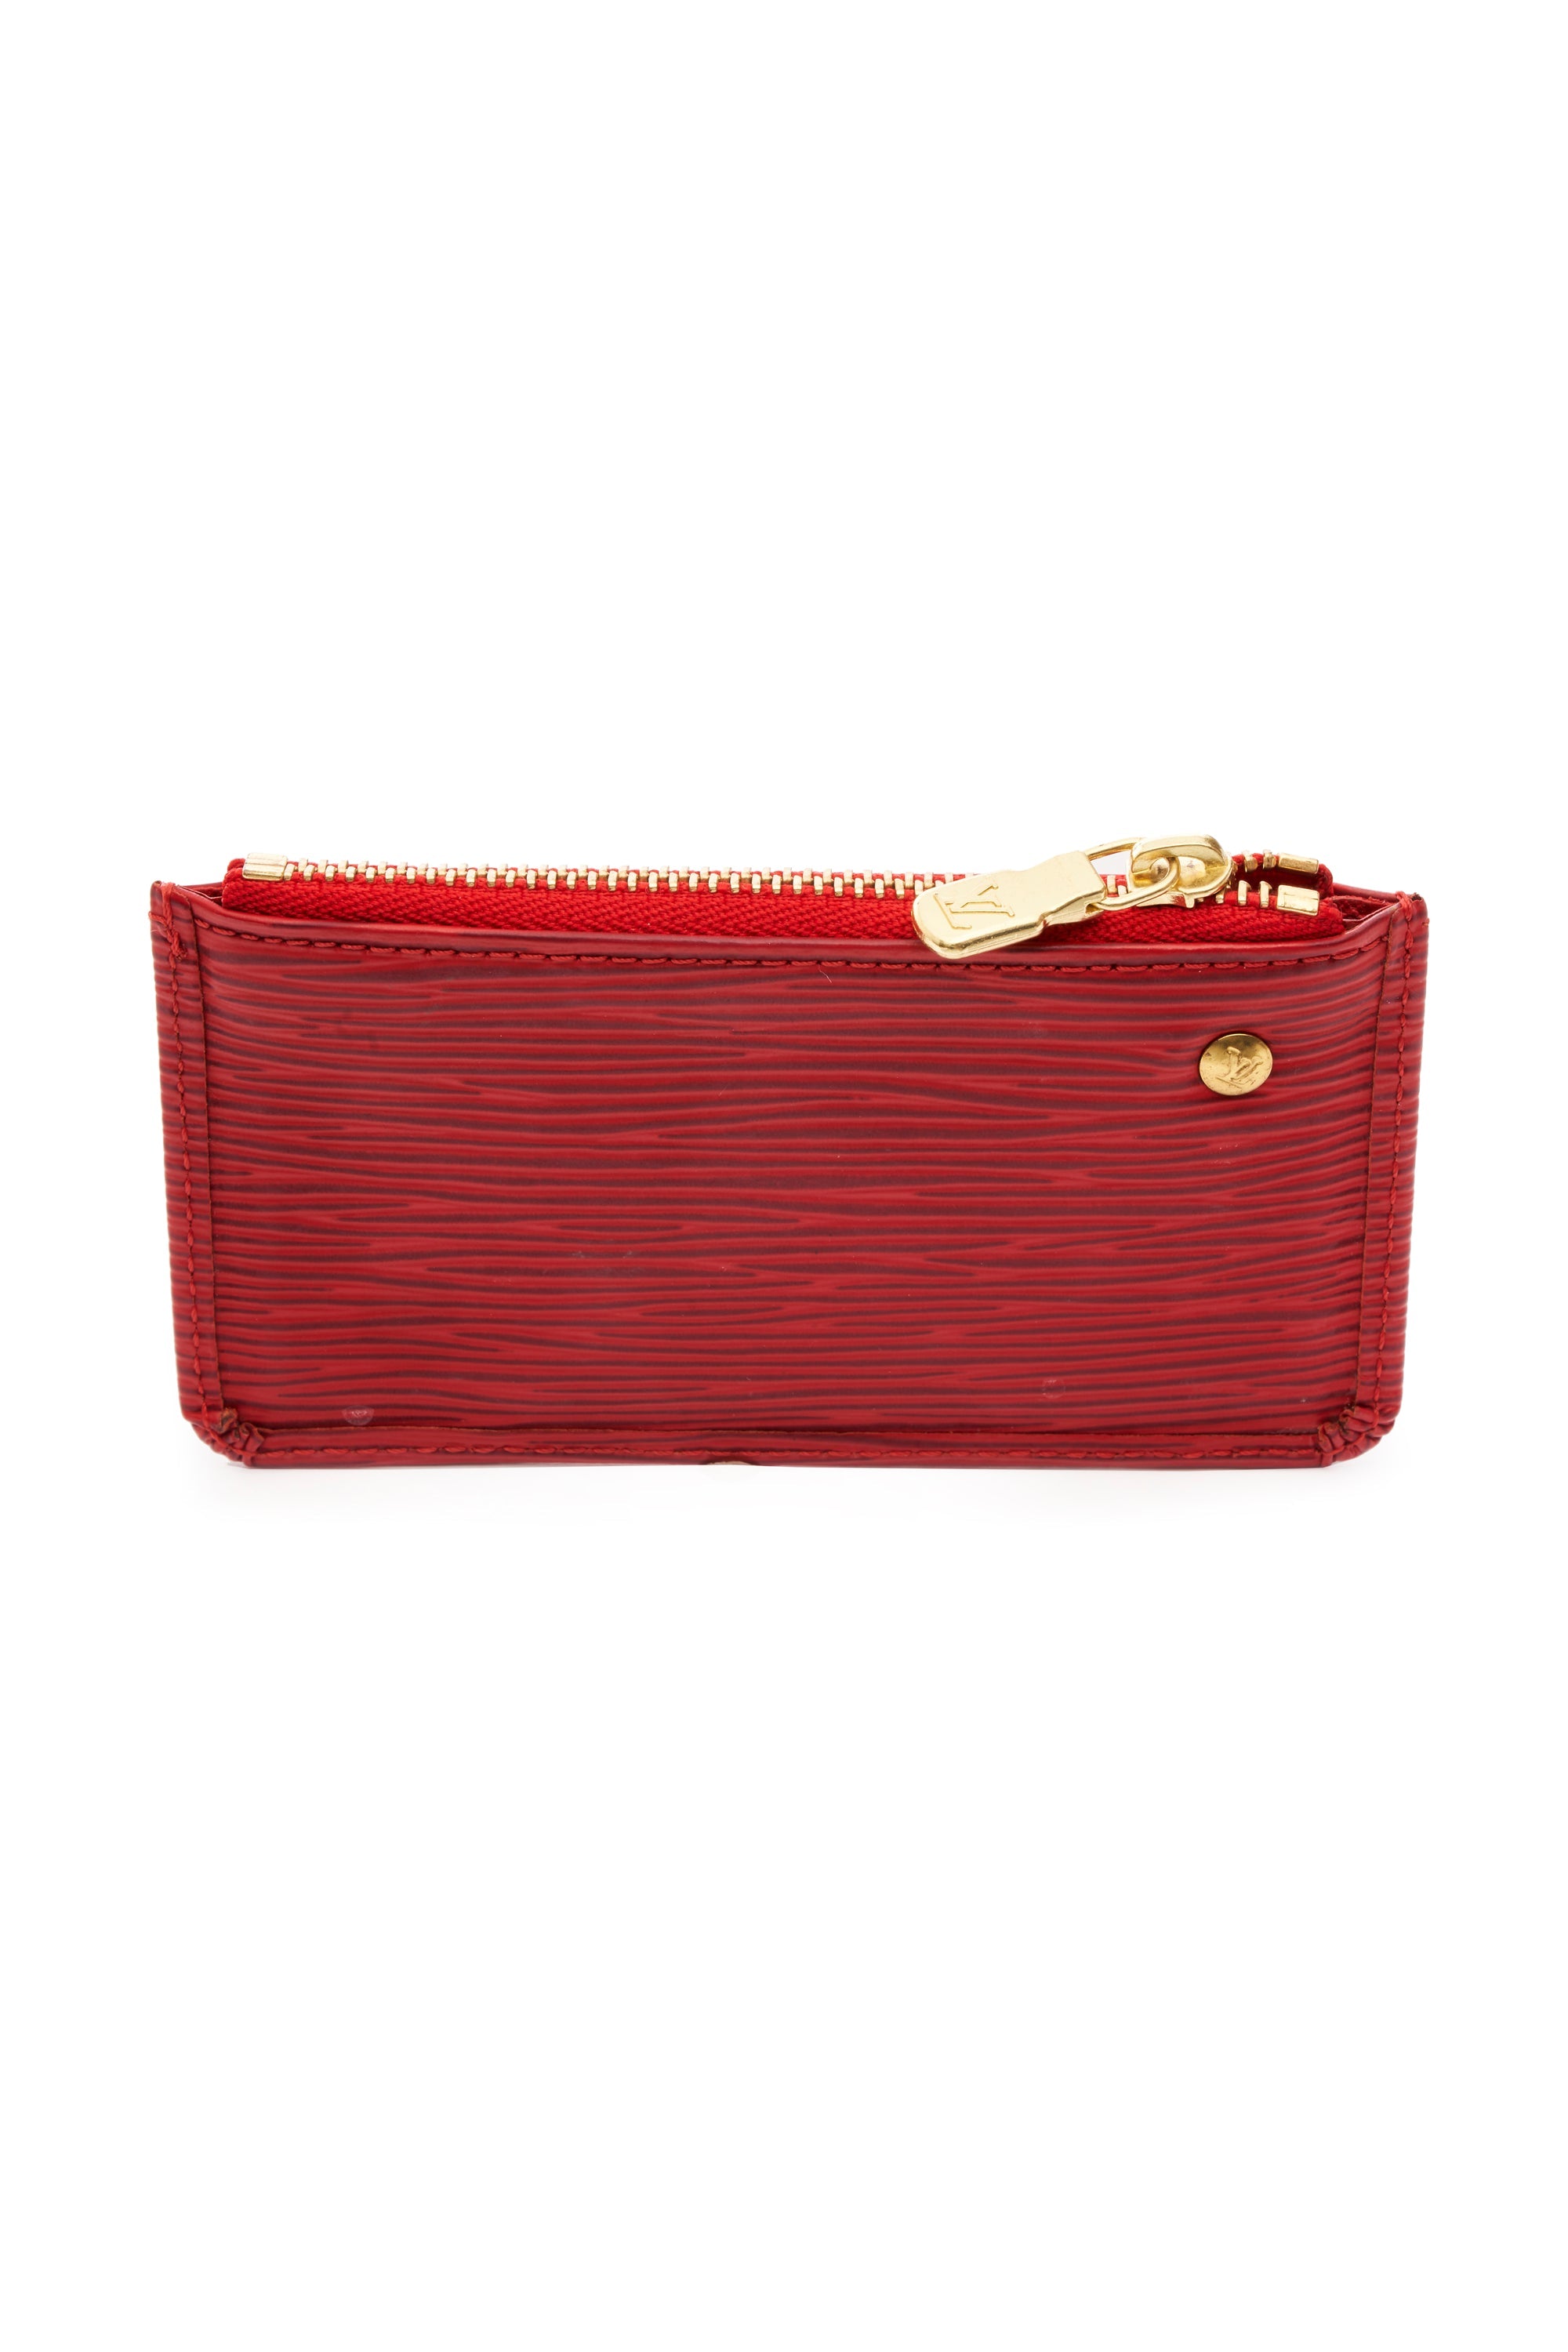 Louis Vuitton Red Epi Leather Mini Key Pouch